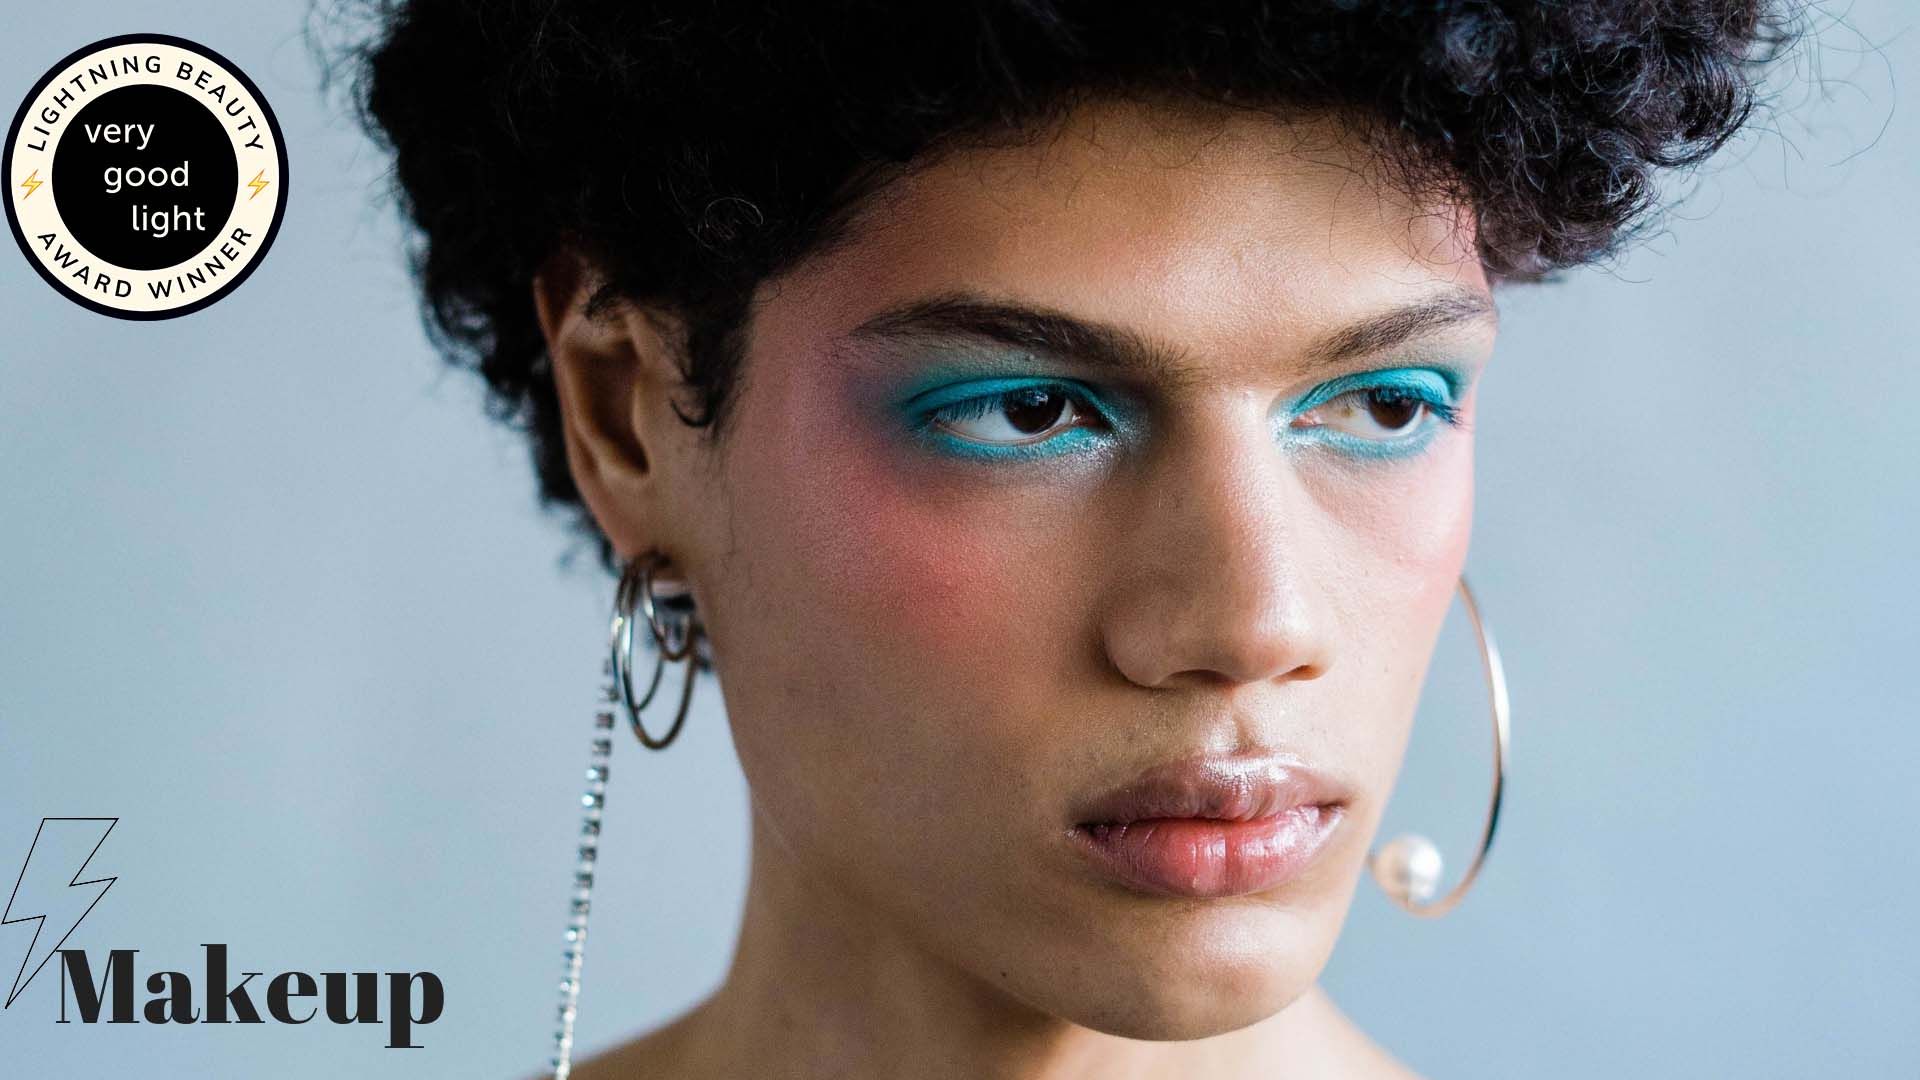 Winners of Good Light's 2018 makeup